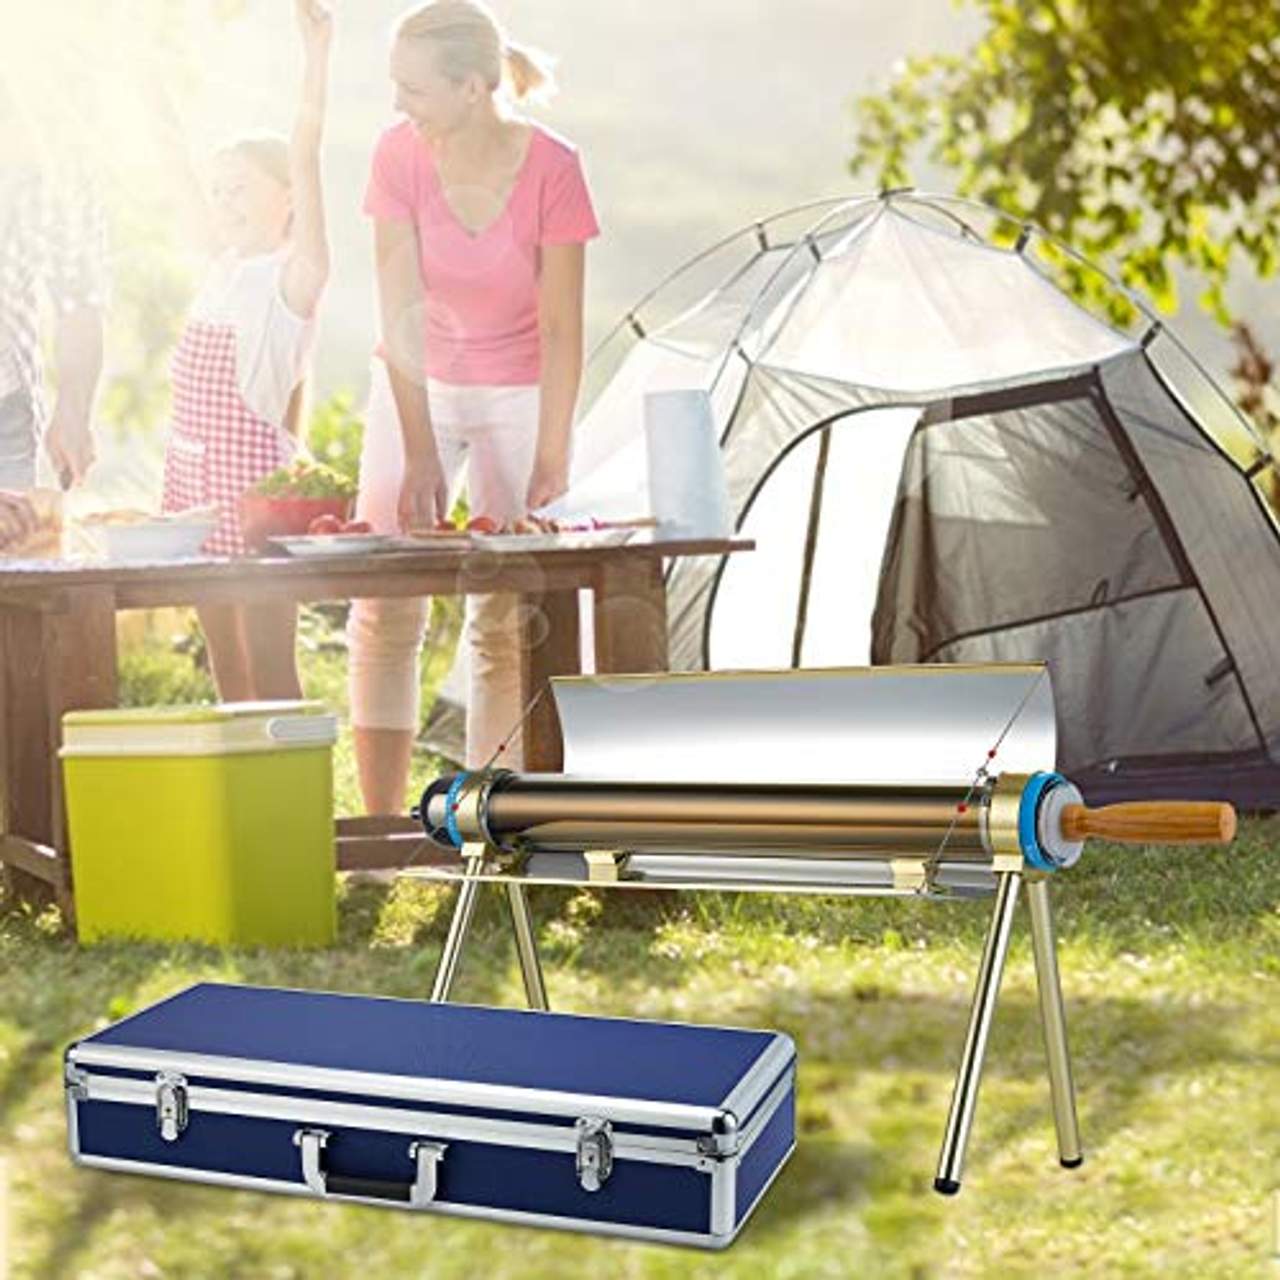 EGZYYSWD Solargrill Solarcampinggrill Campingkochutensilien und Überlebensausrüstung